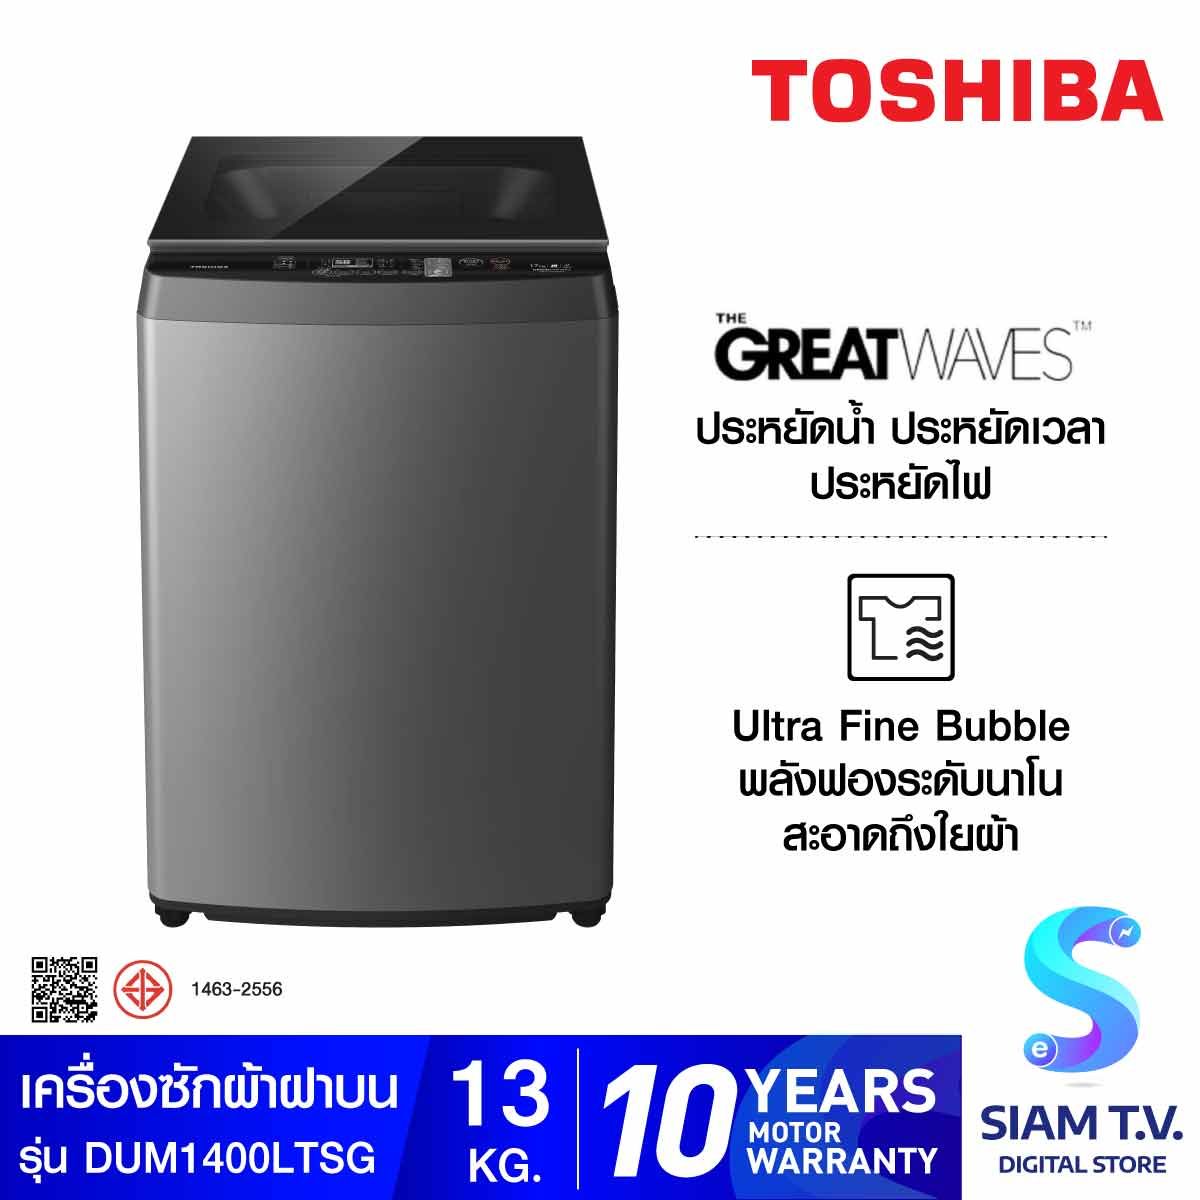 TOSHIBA เครื่องซักผ้าฝาบน 13KG  DD INVERTER รุ่น AW-DUM1400LT(SG)